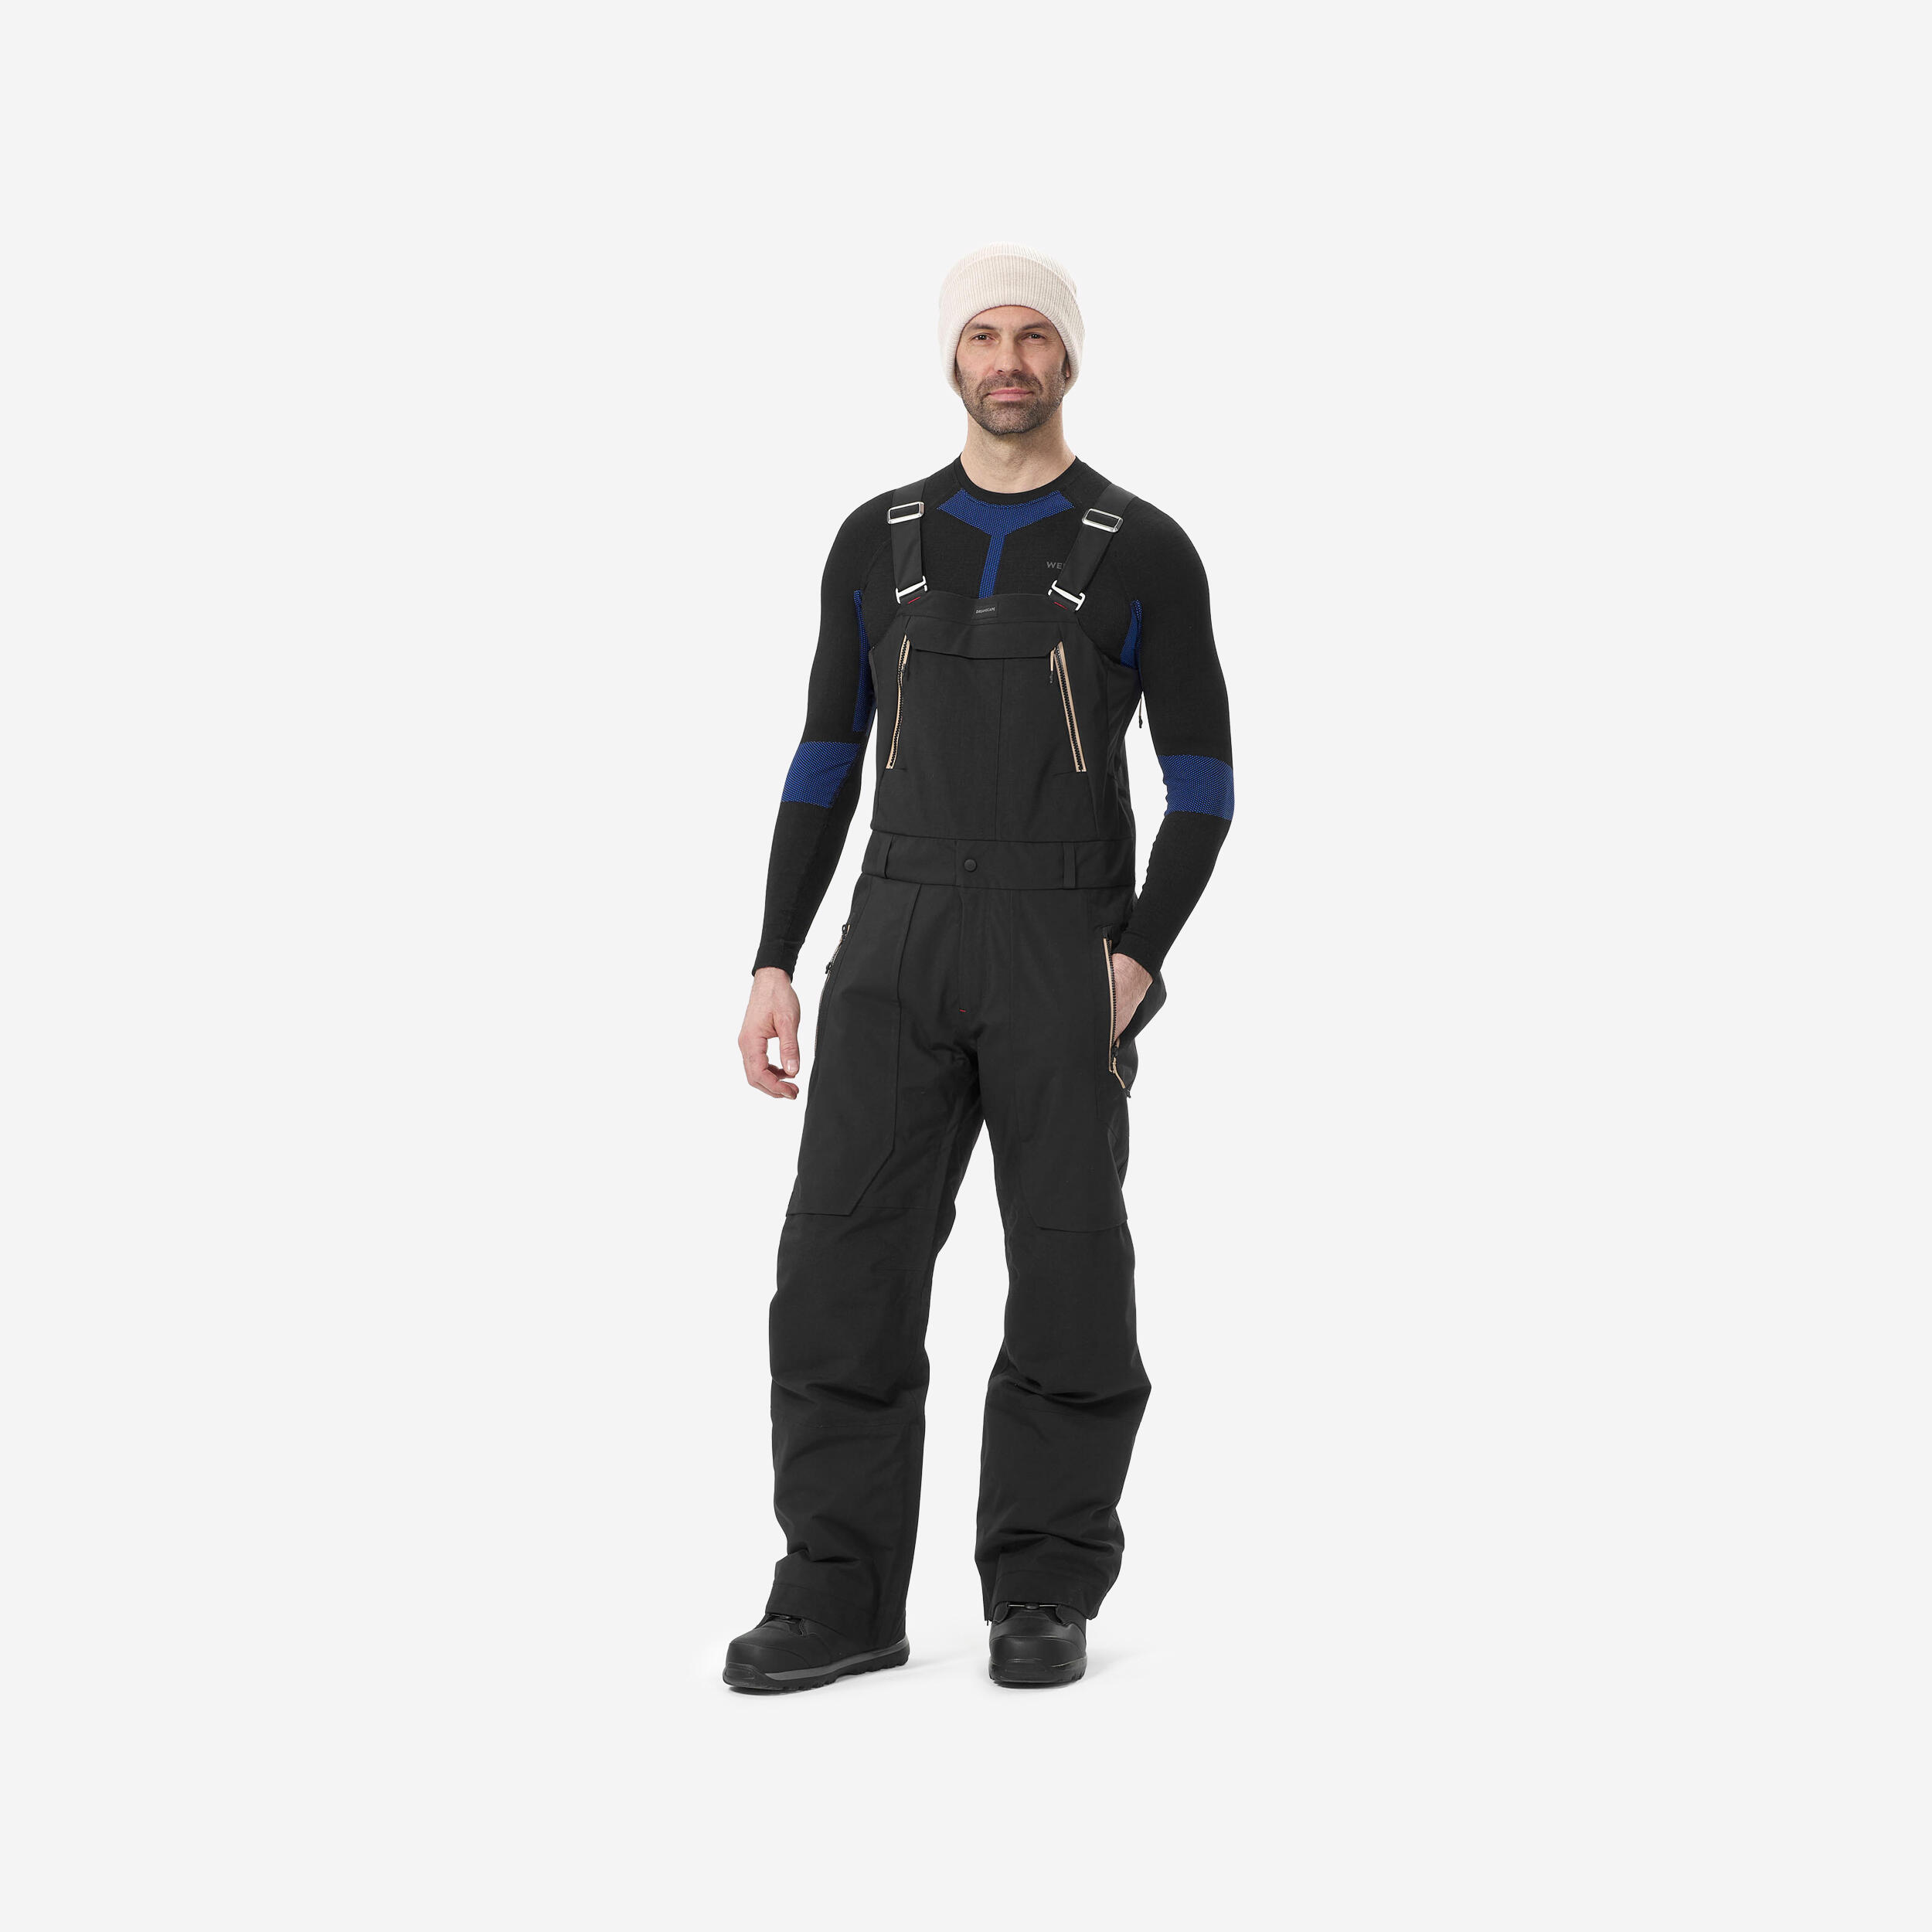 DREAMSCAPE Men's Waterproof Snowboard Salopette Trousers SNB 900 UP - Black